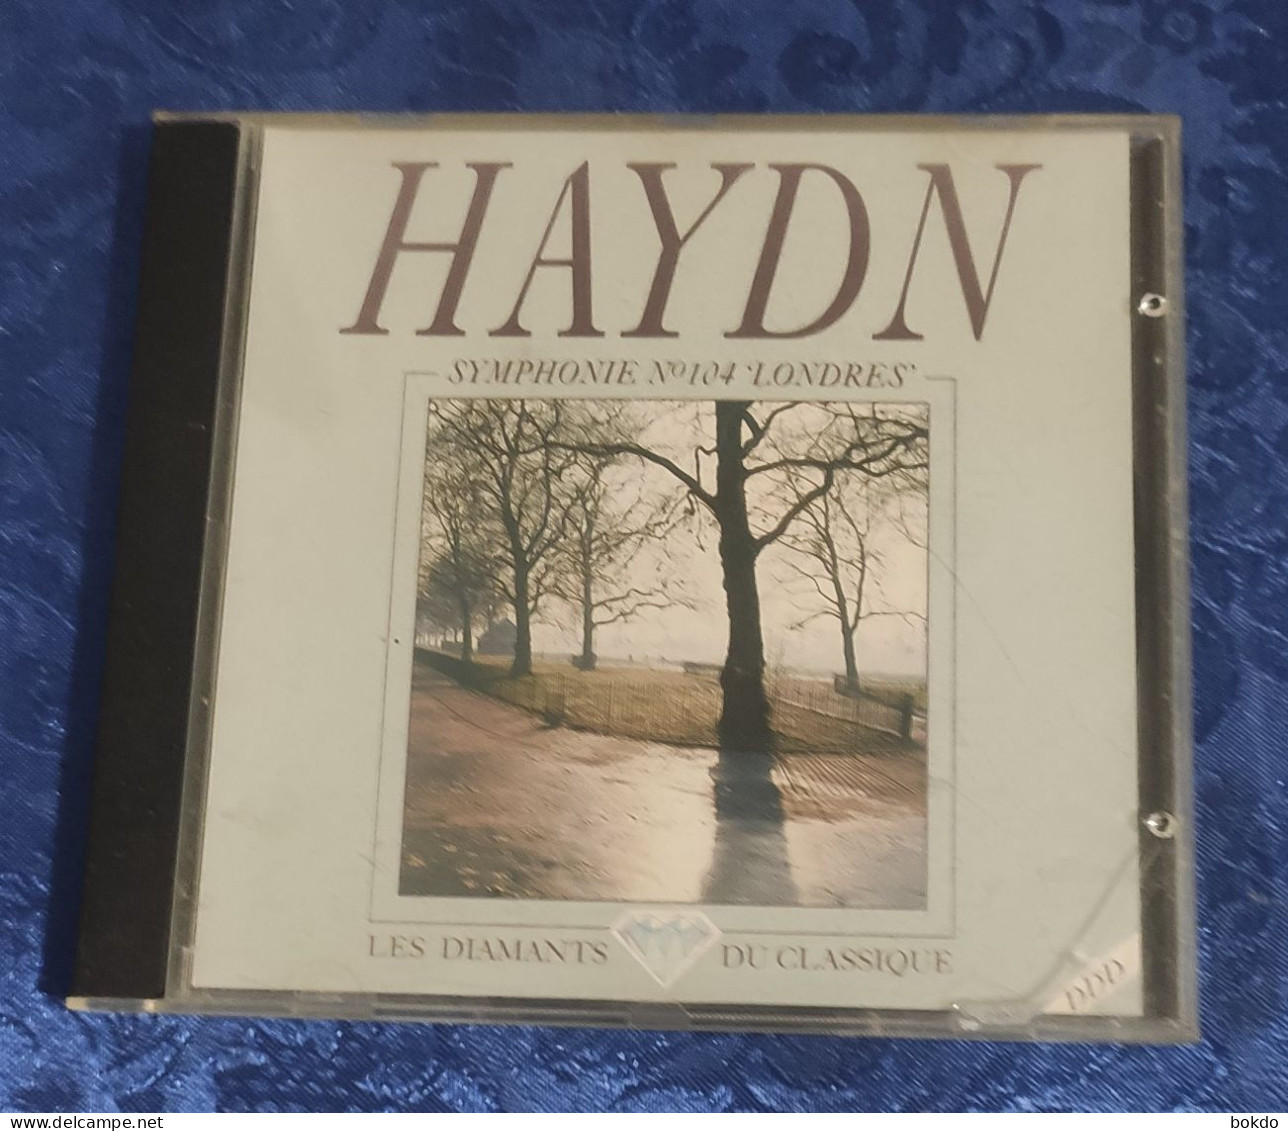 HAYDN - Symphonie N° 104 "londres" - Classica